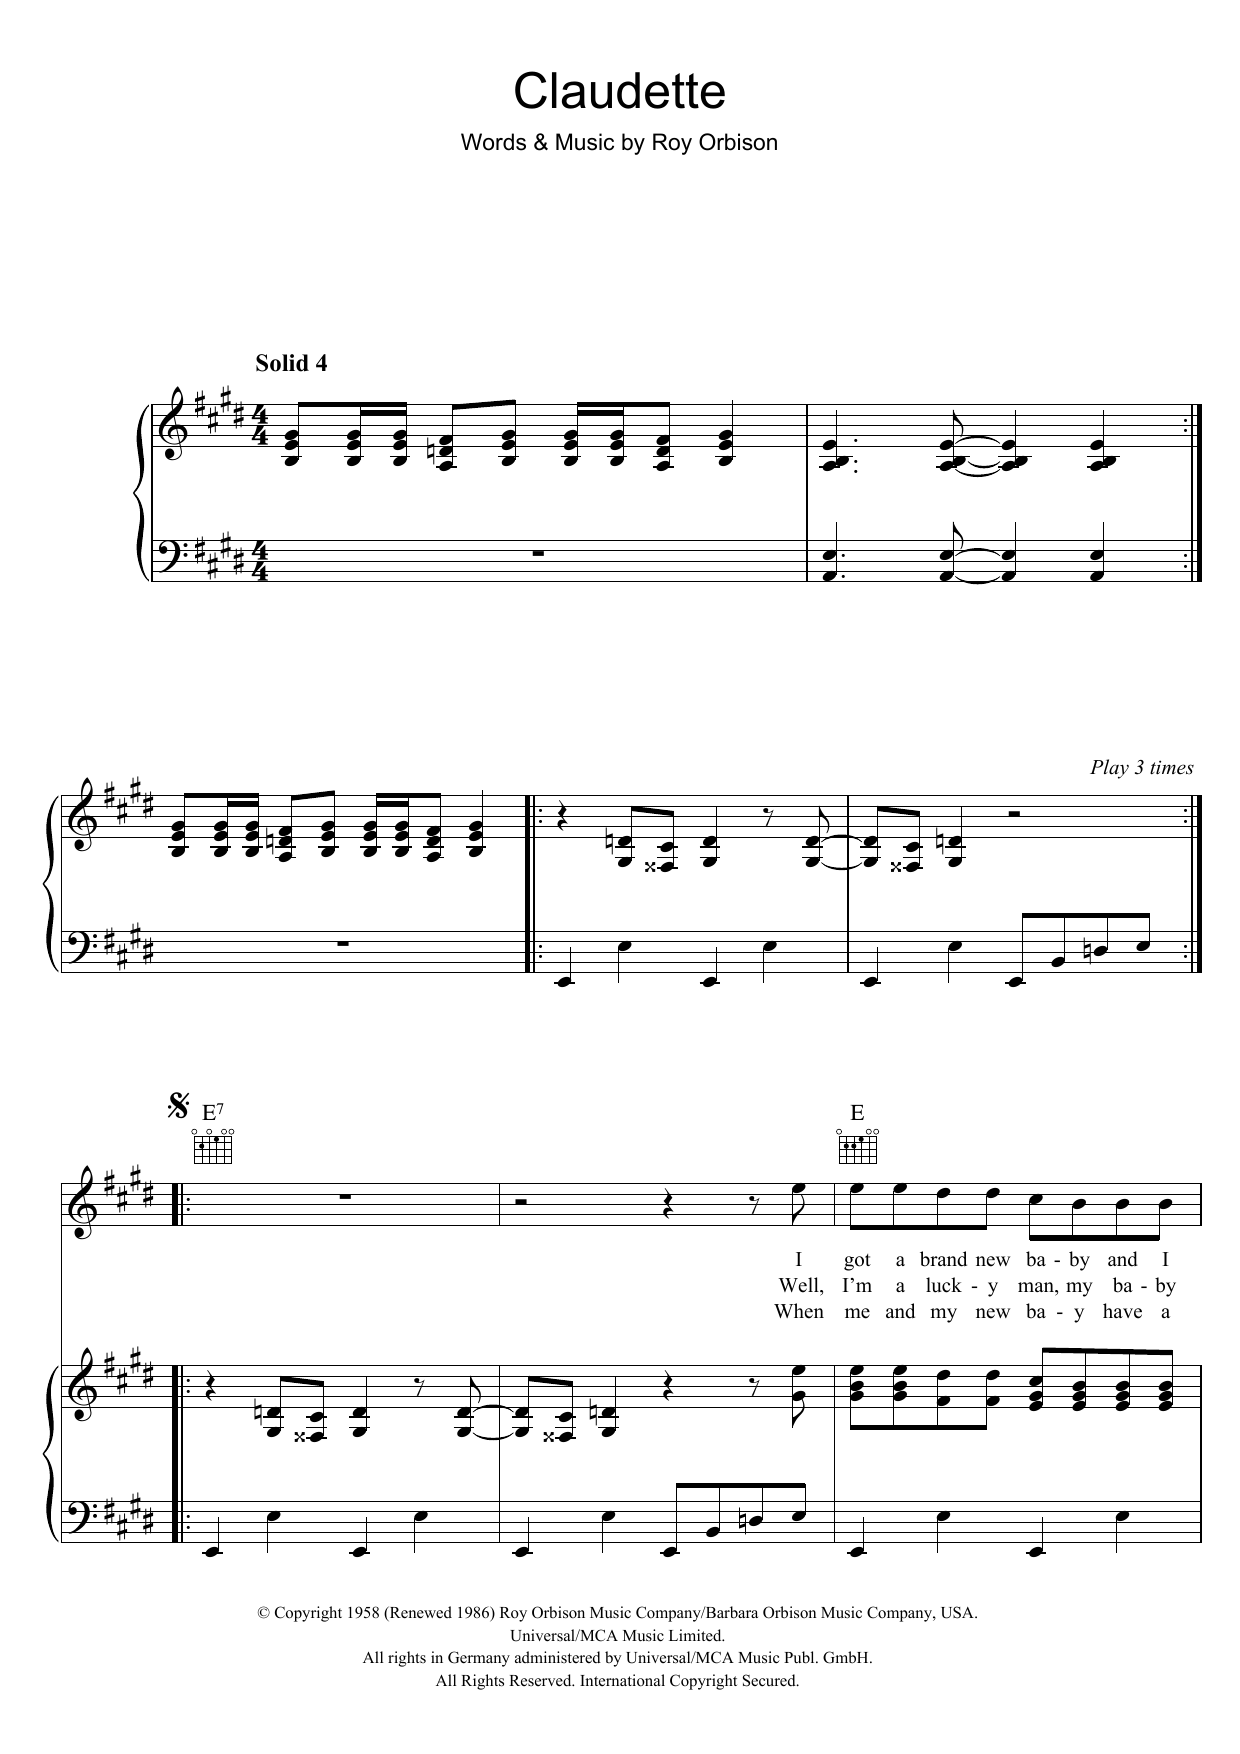 Roy Orbison Claudette Sheet Music Notes & Chords for Lyrics & Chords - Download or Print PDF